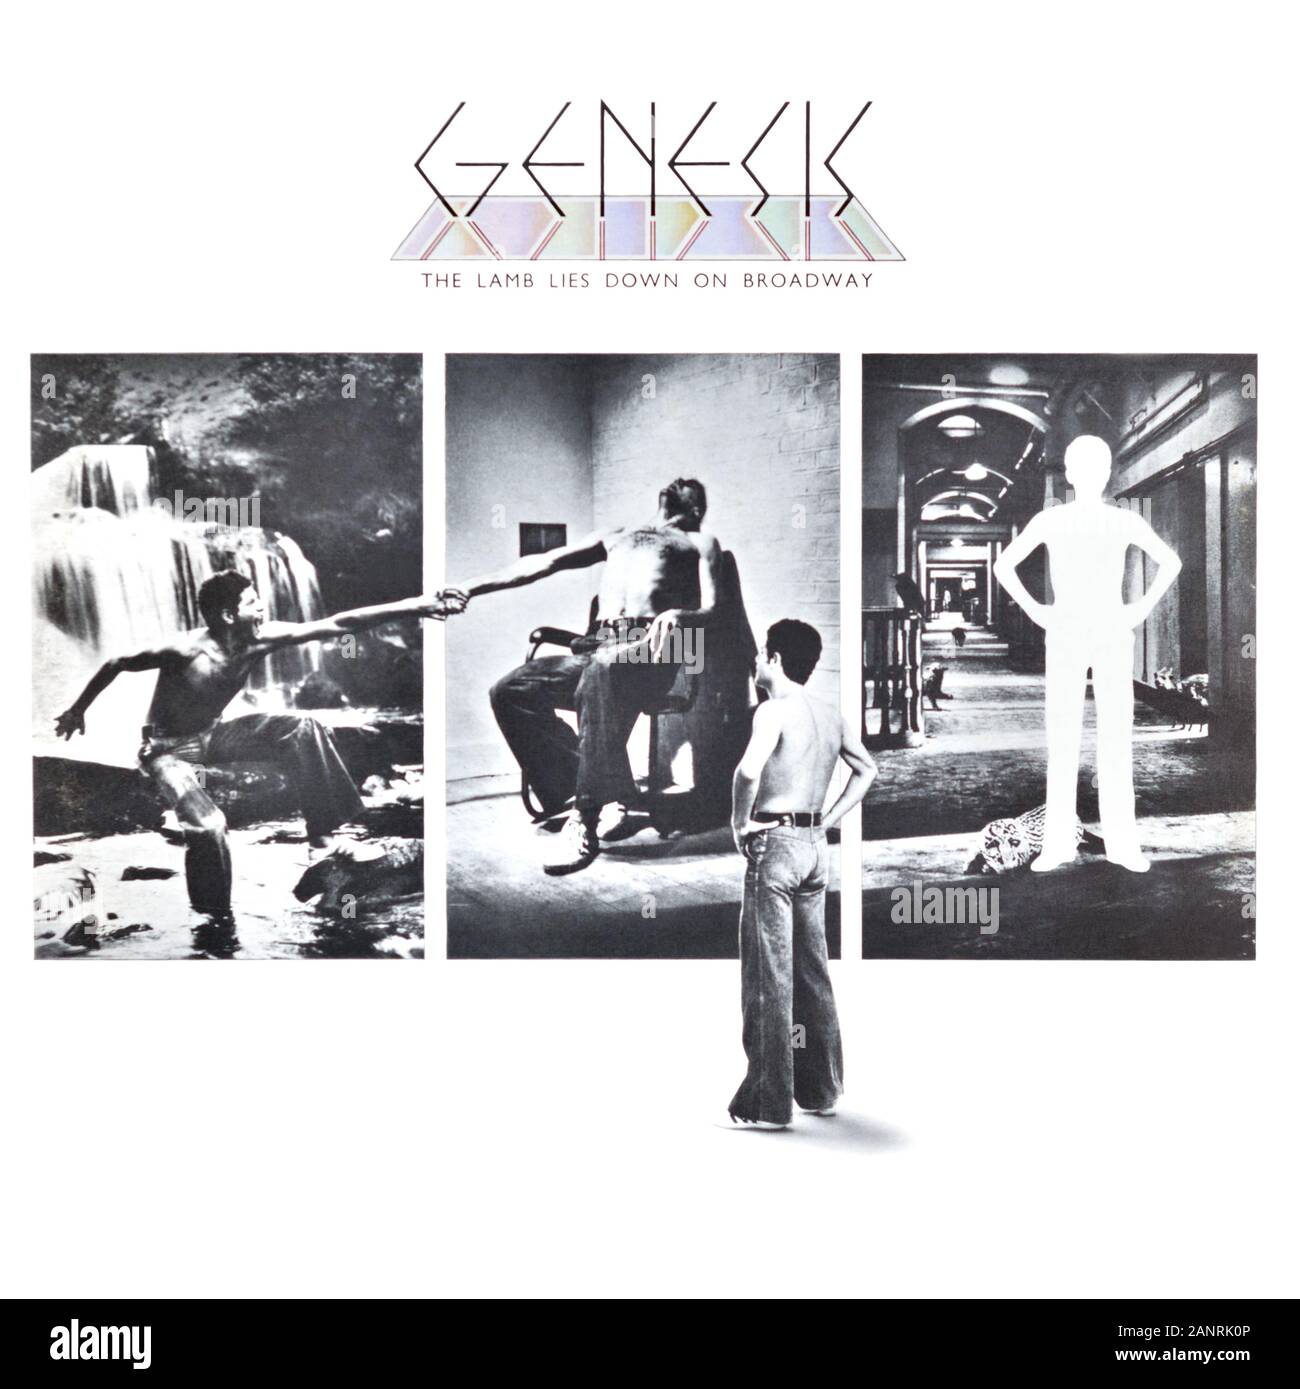 Genesis - copertina originale dell'album in vinile - The Lamb Lies Down on Broadway - 1974 Foto Stock